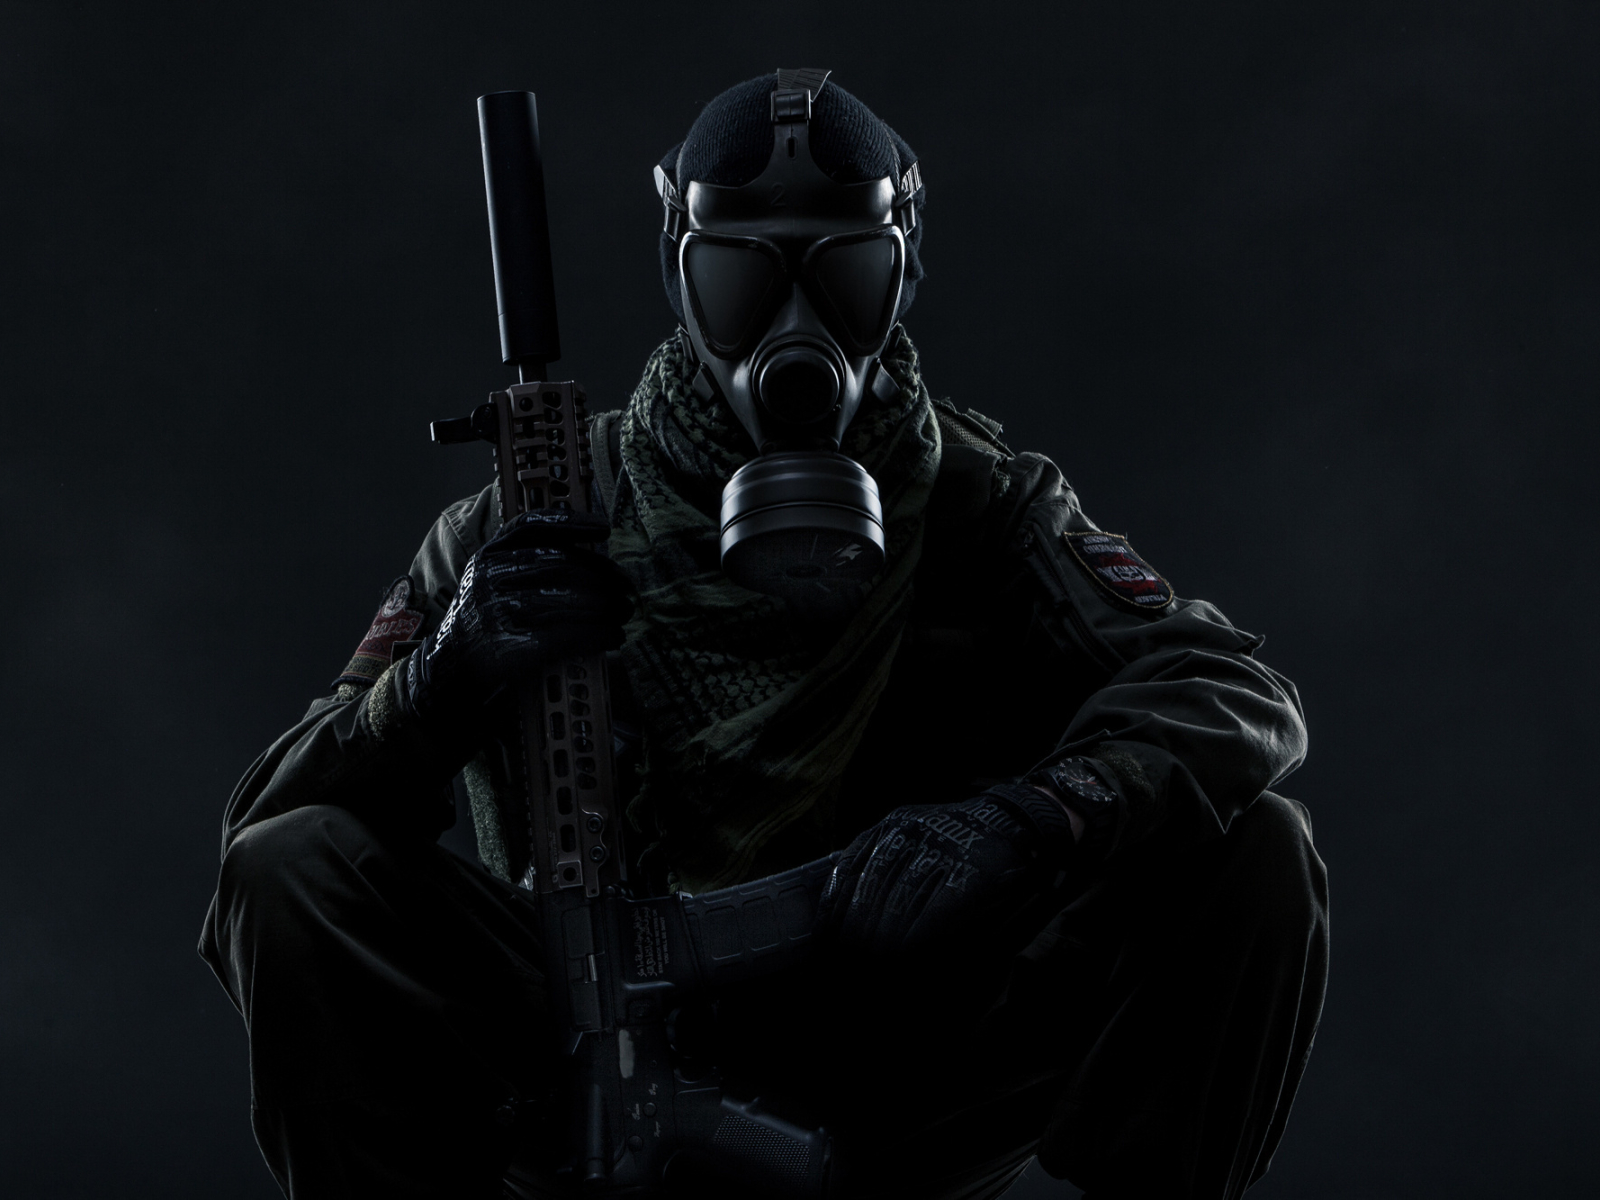 Gas Mask Soldier Tom Clancy’s Ghost Recon Wildlands, Full HD 2K Wallpaper